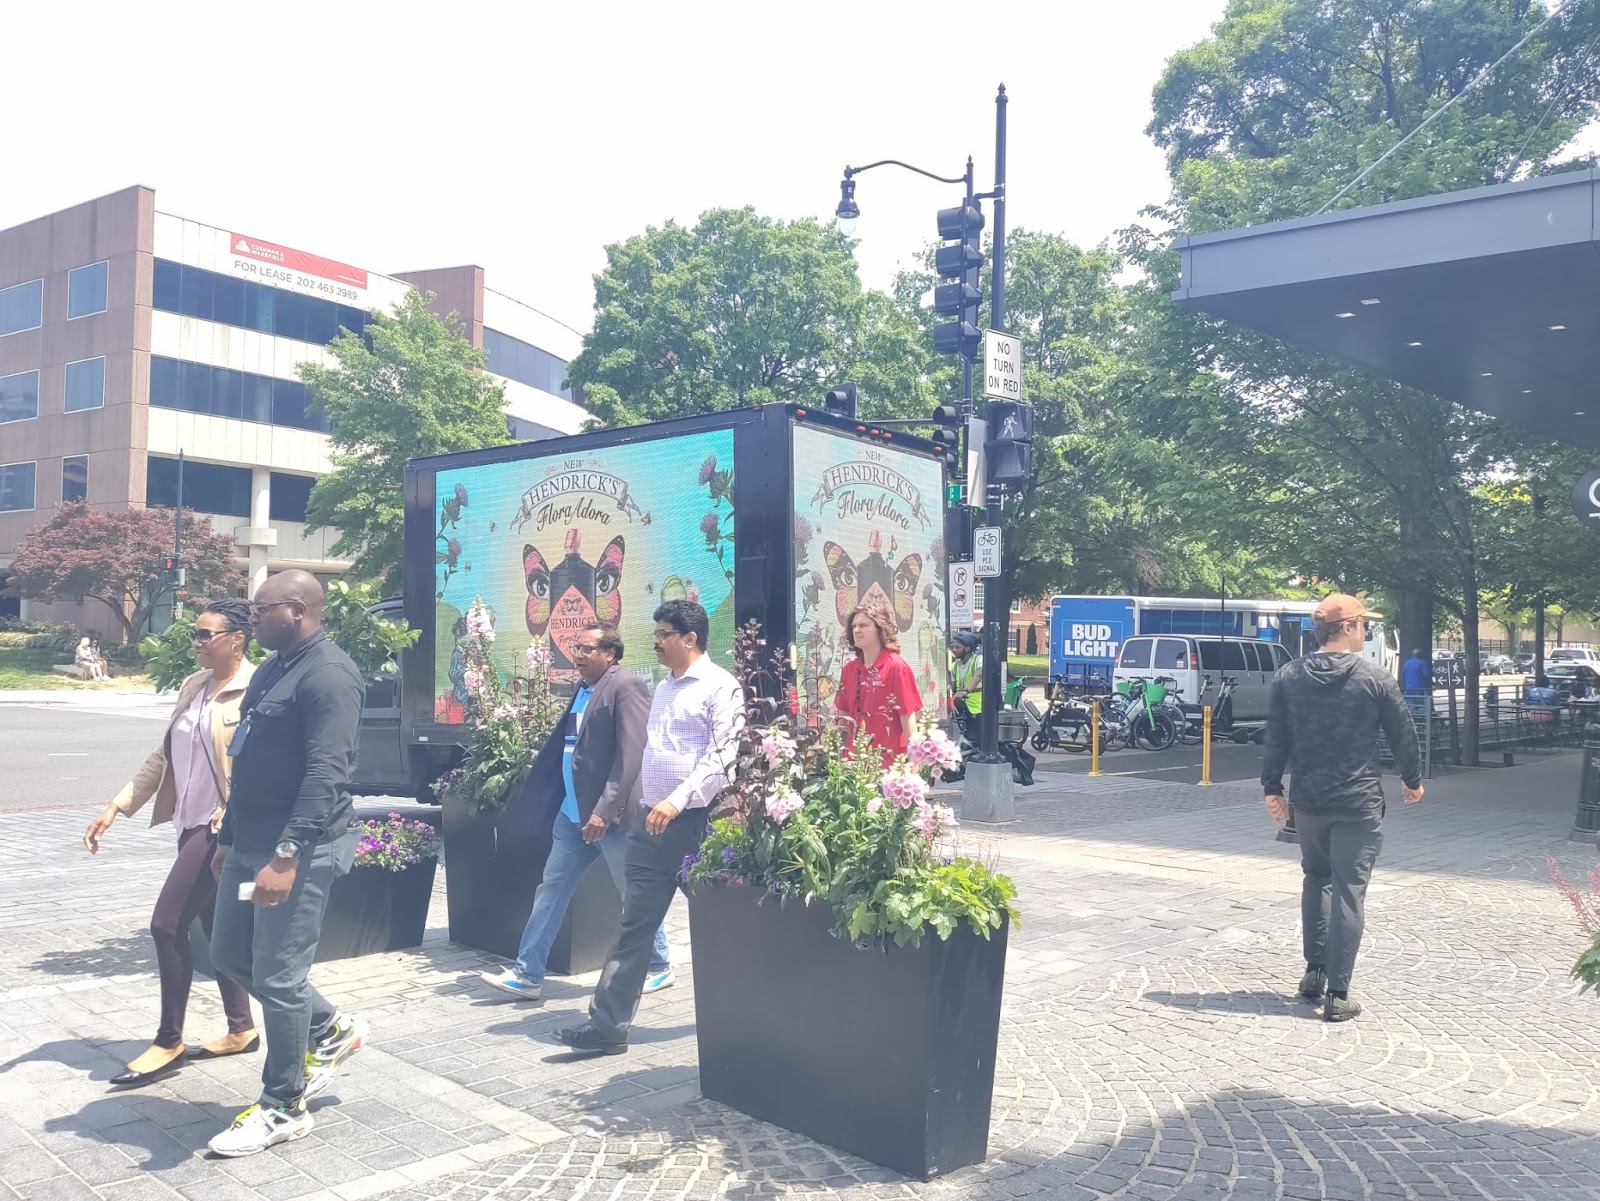 One of Cant Miss US' Digital billboard trucks showcase Hendrick's Gin advertisement, with bustling pedestrians on Washington streets.